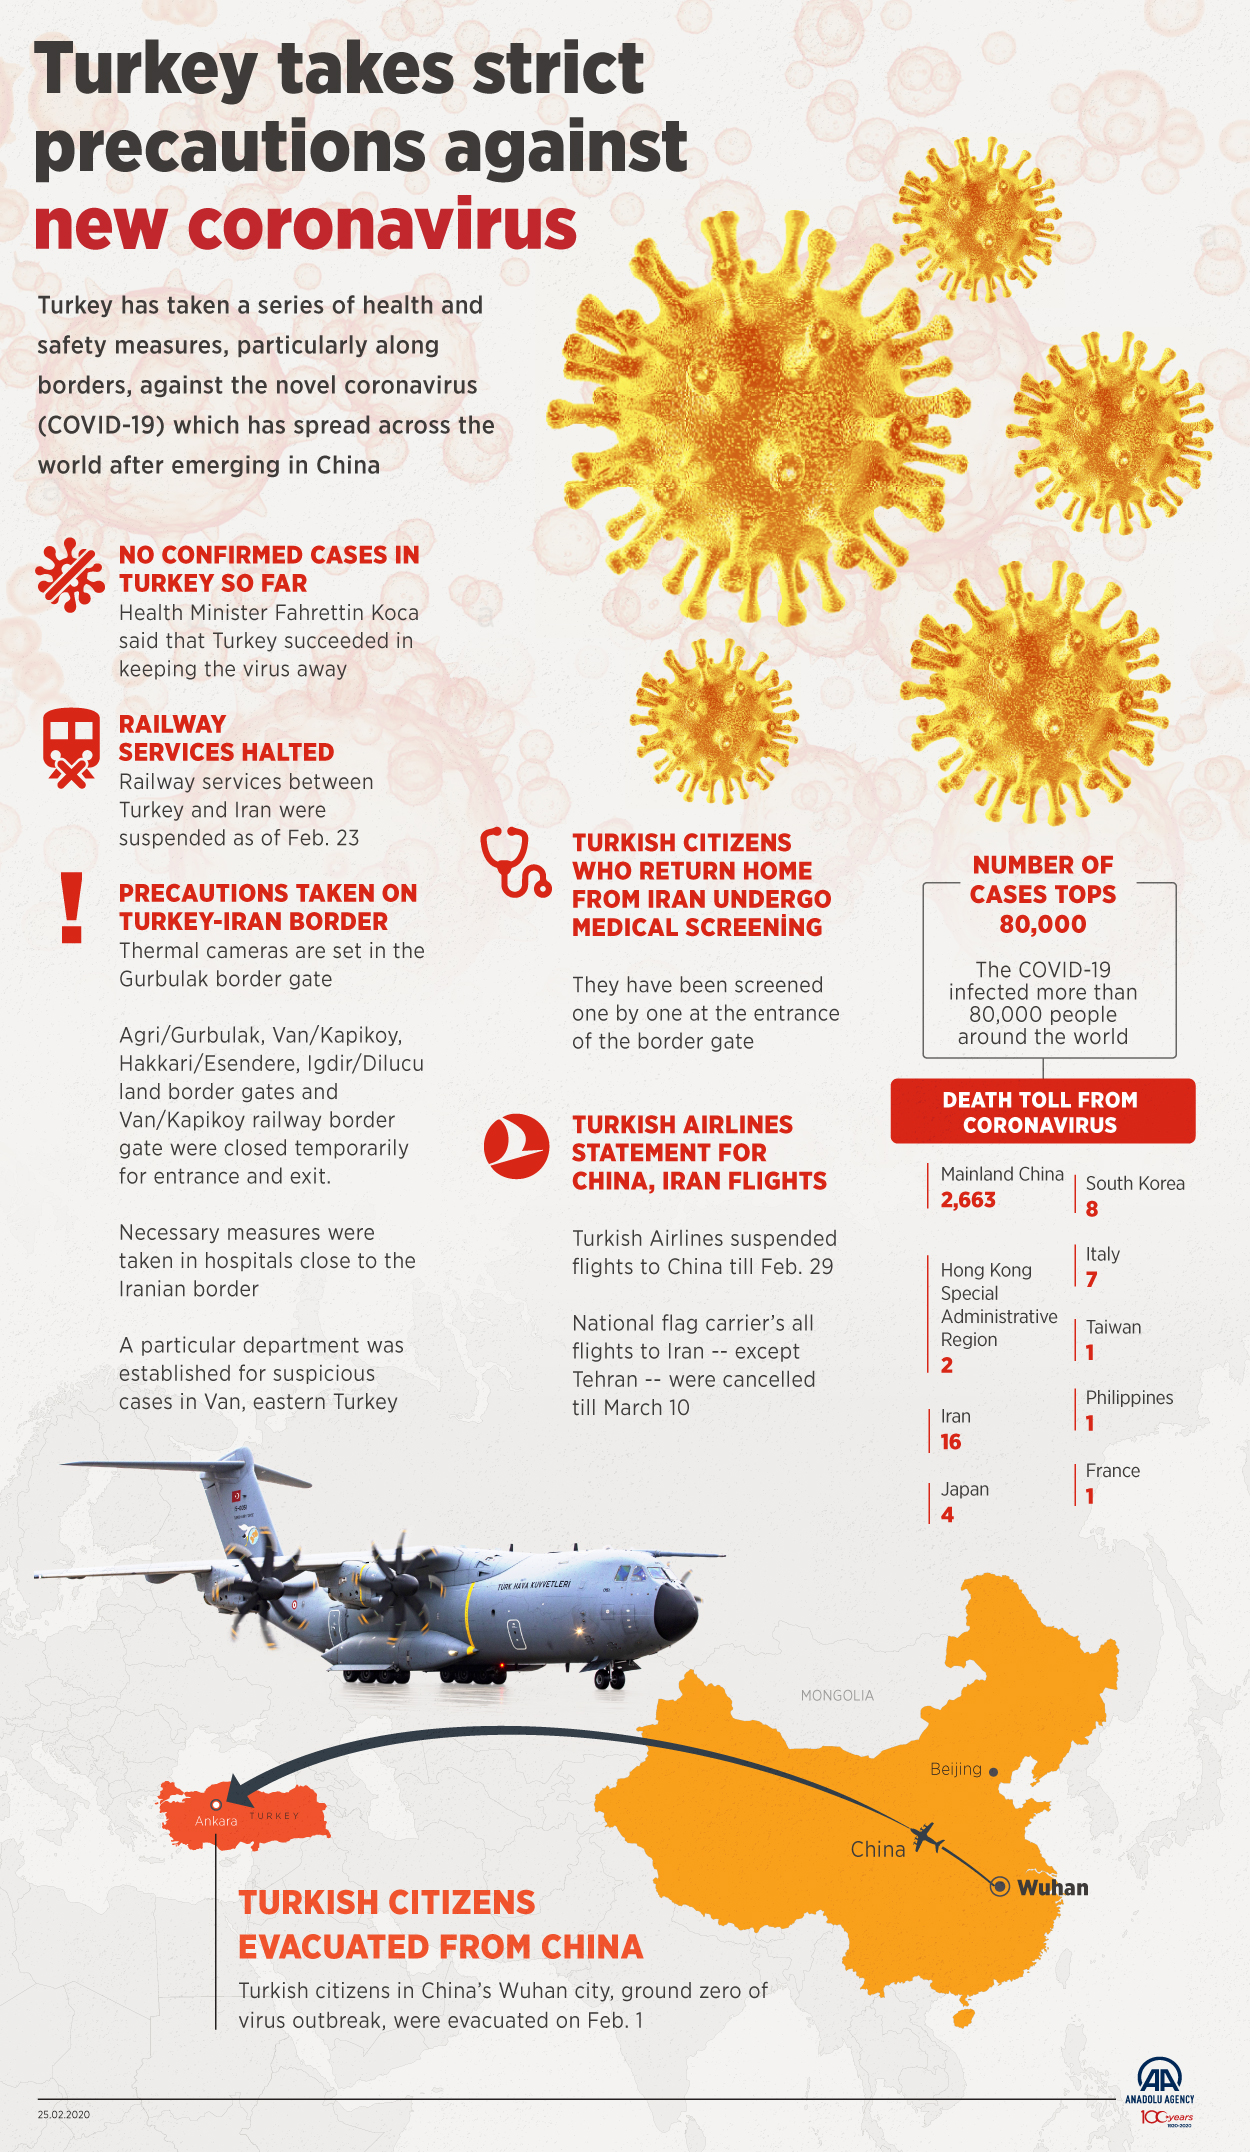 Turkey takes strict precautions against new coronavirus